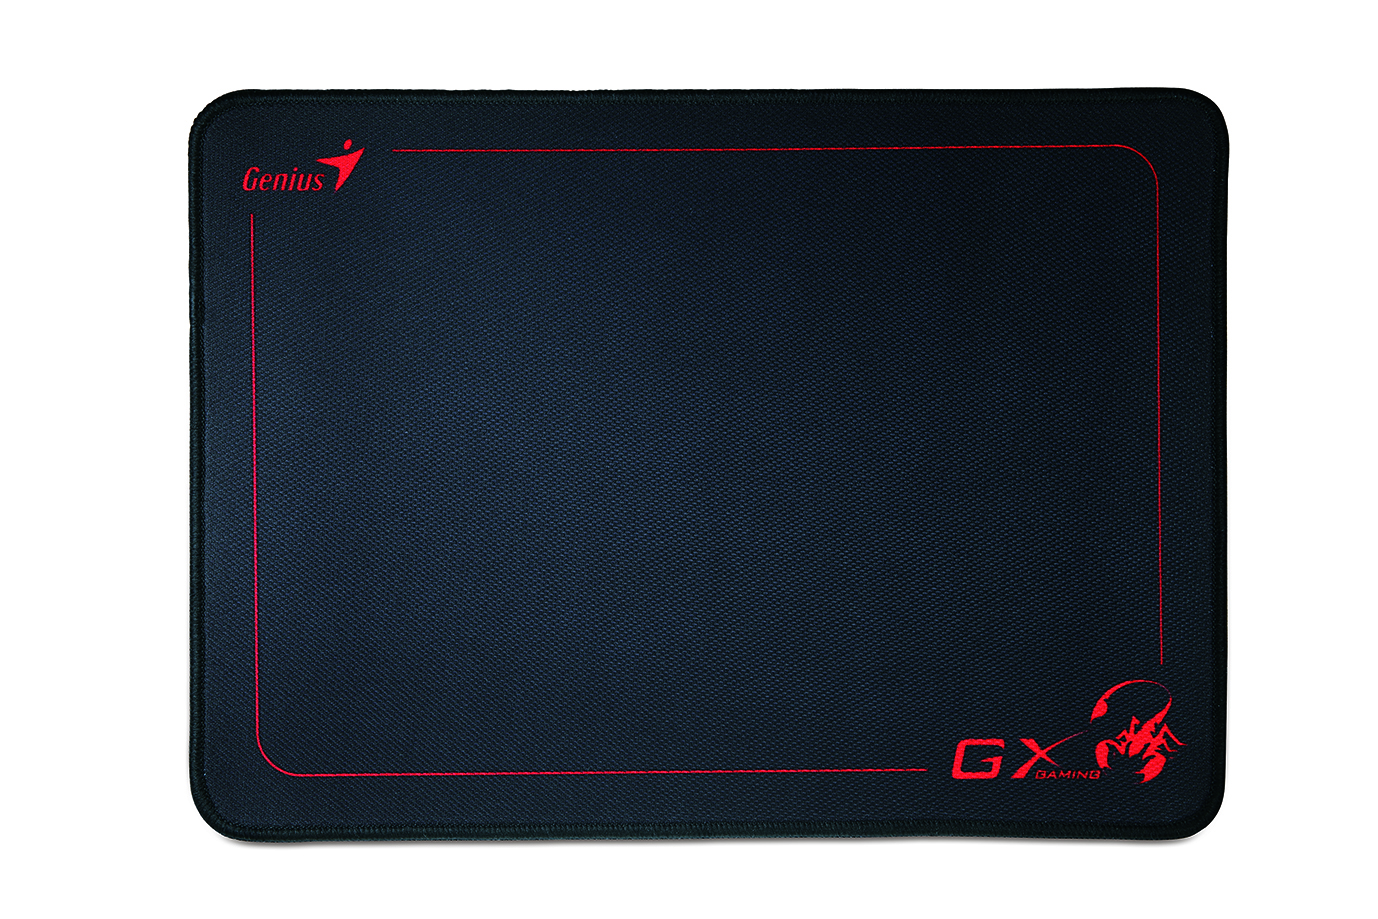 Wholesale gx mouse pad : gx-control p100